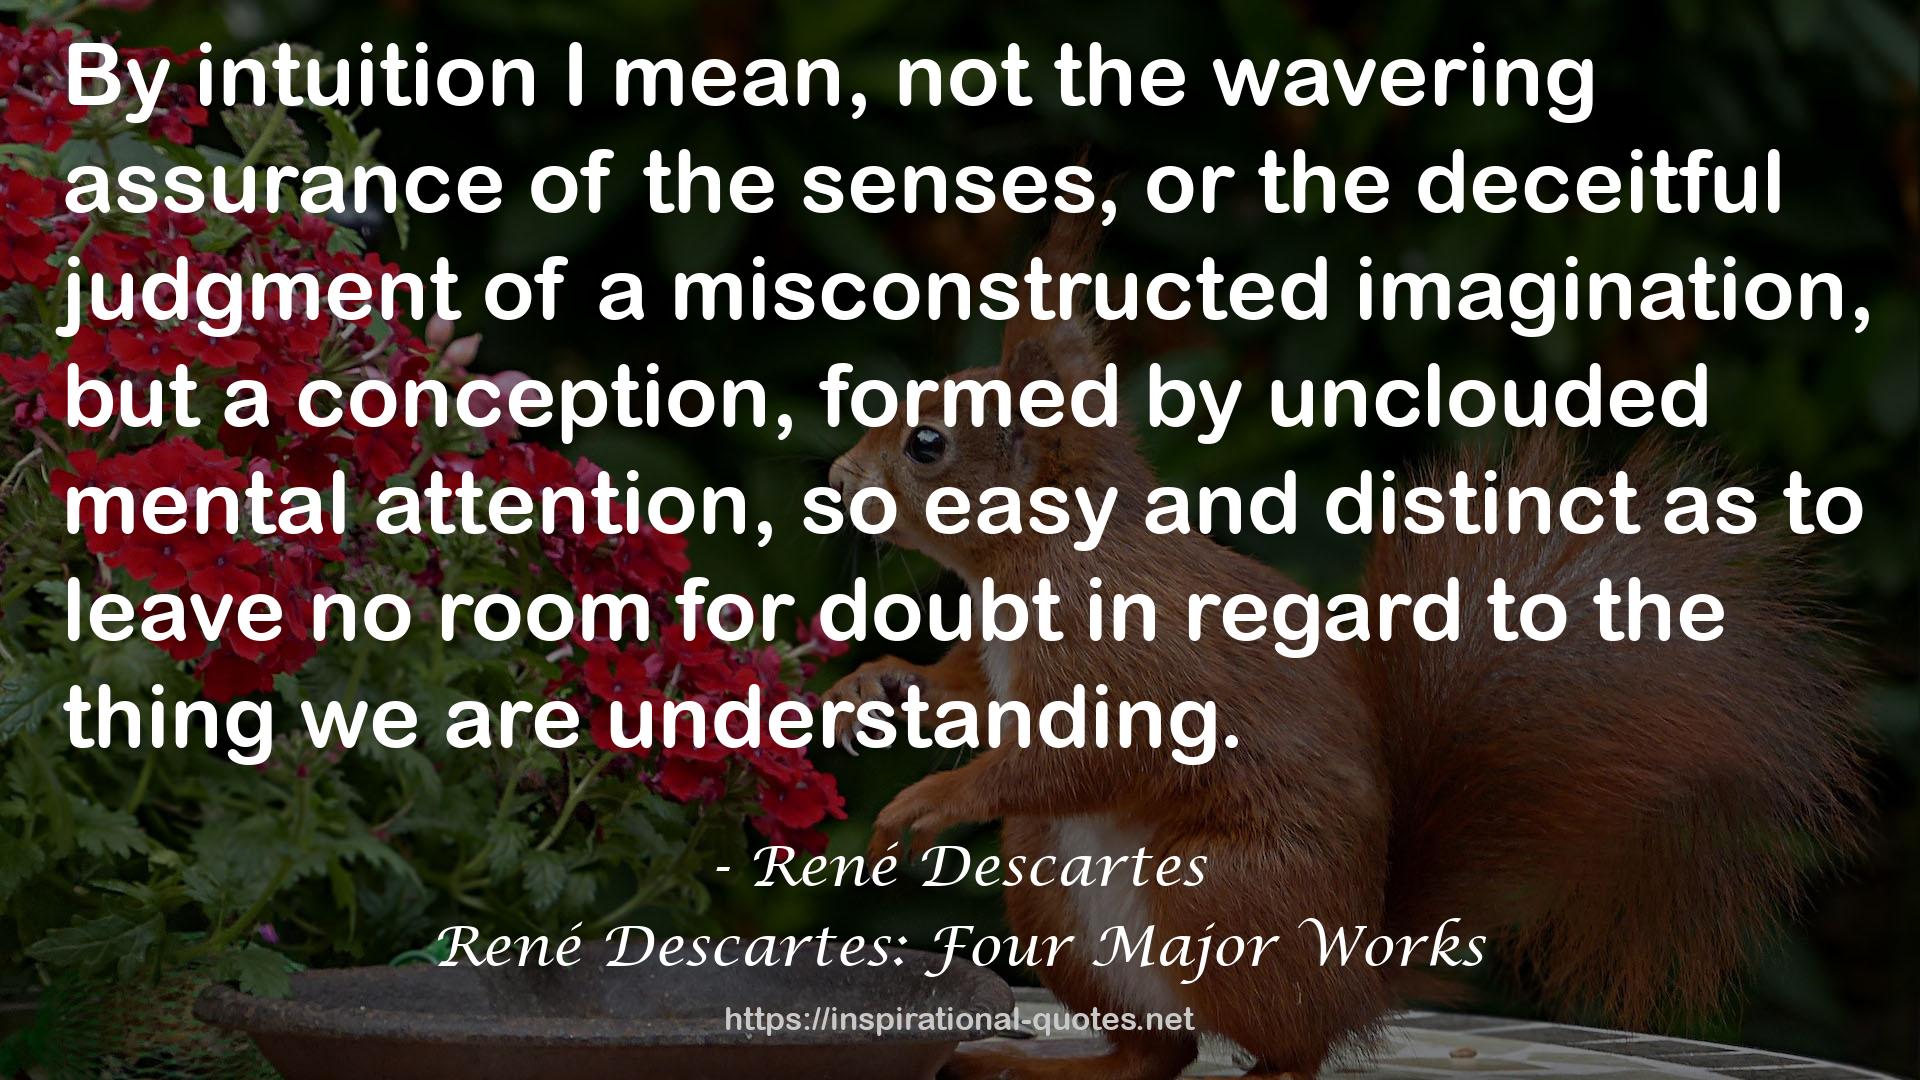 René Descartes: Four Major Works QUOTES